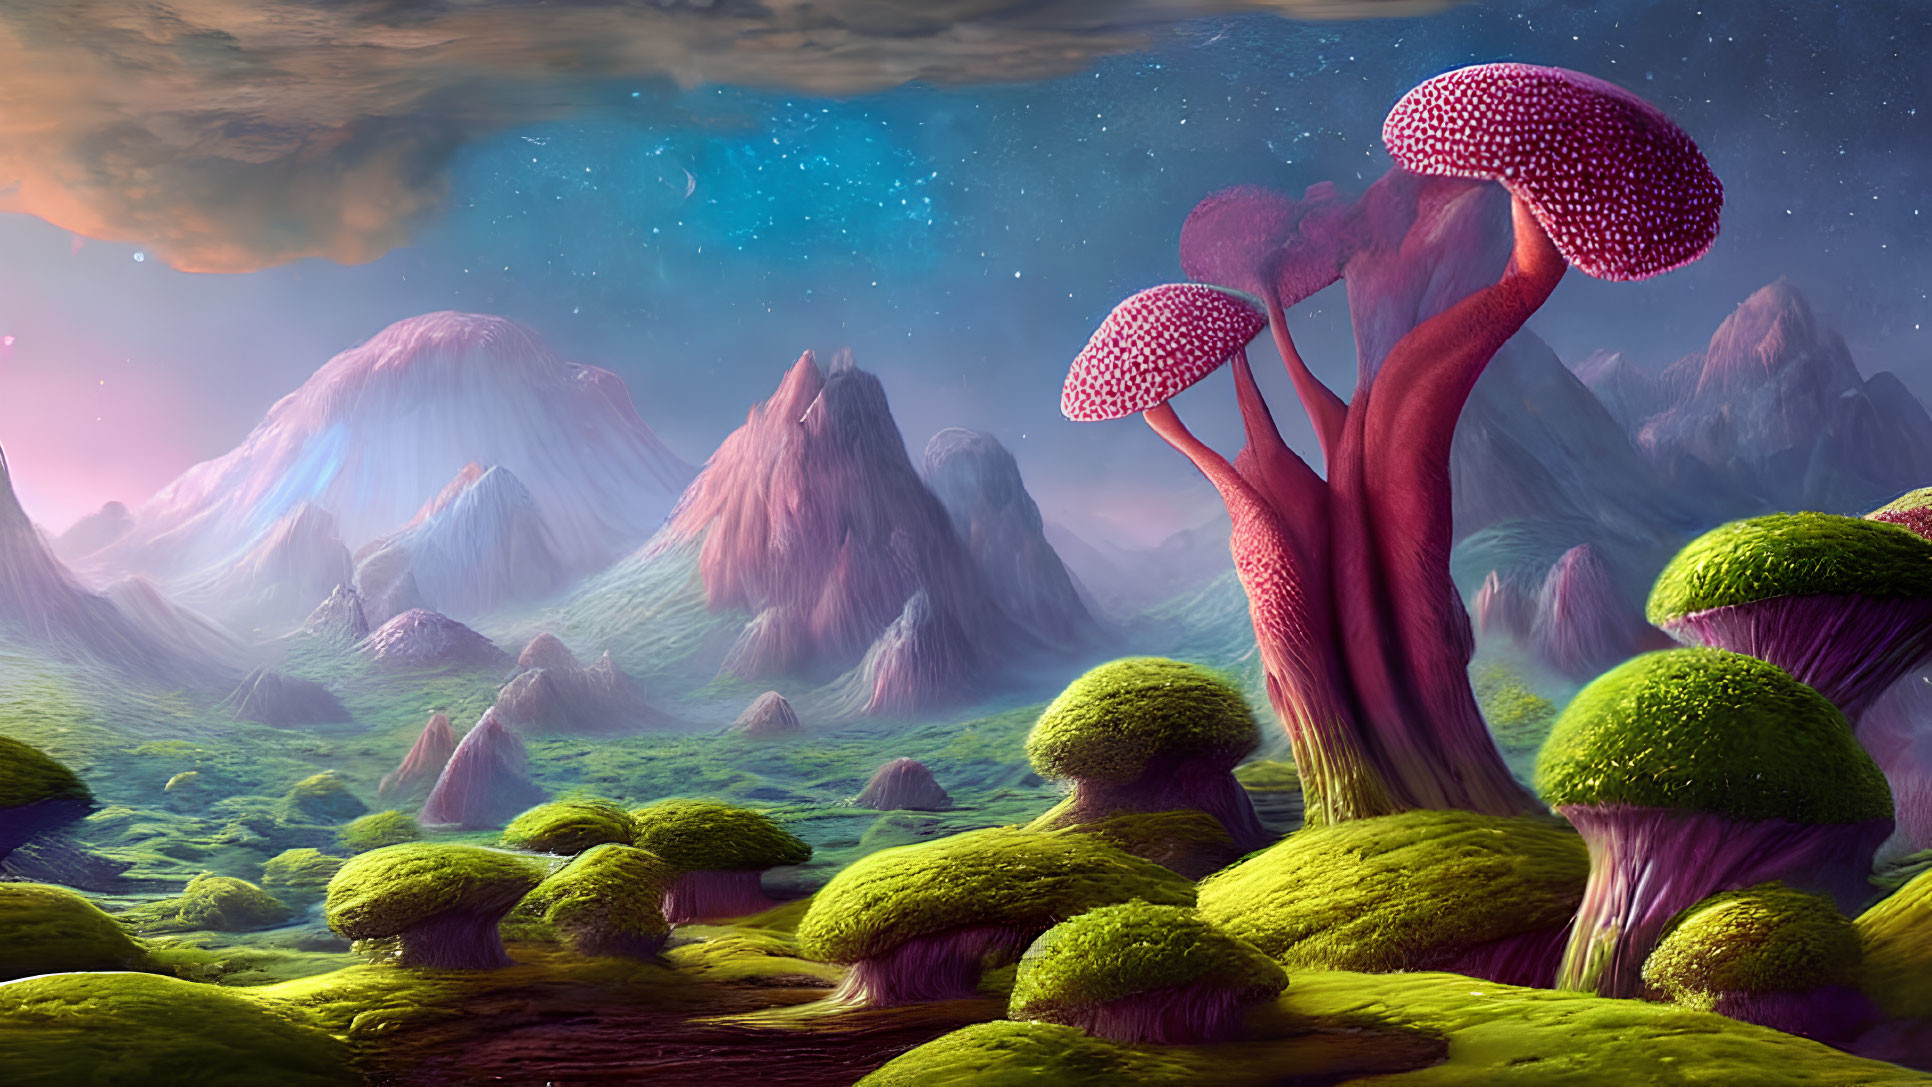 Vibrant oversized mushrooms in surreal landscape